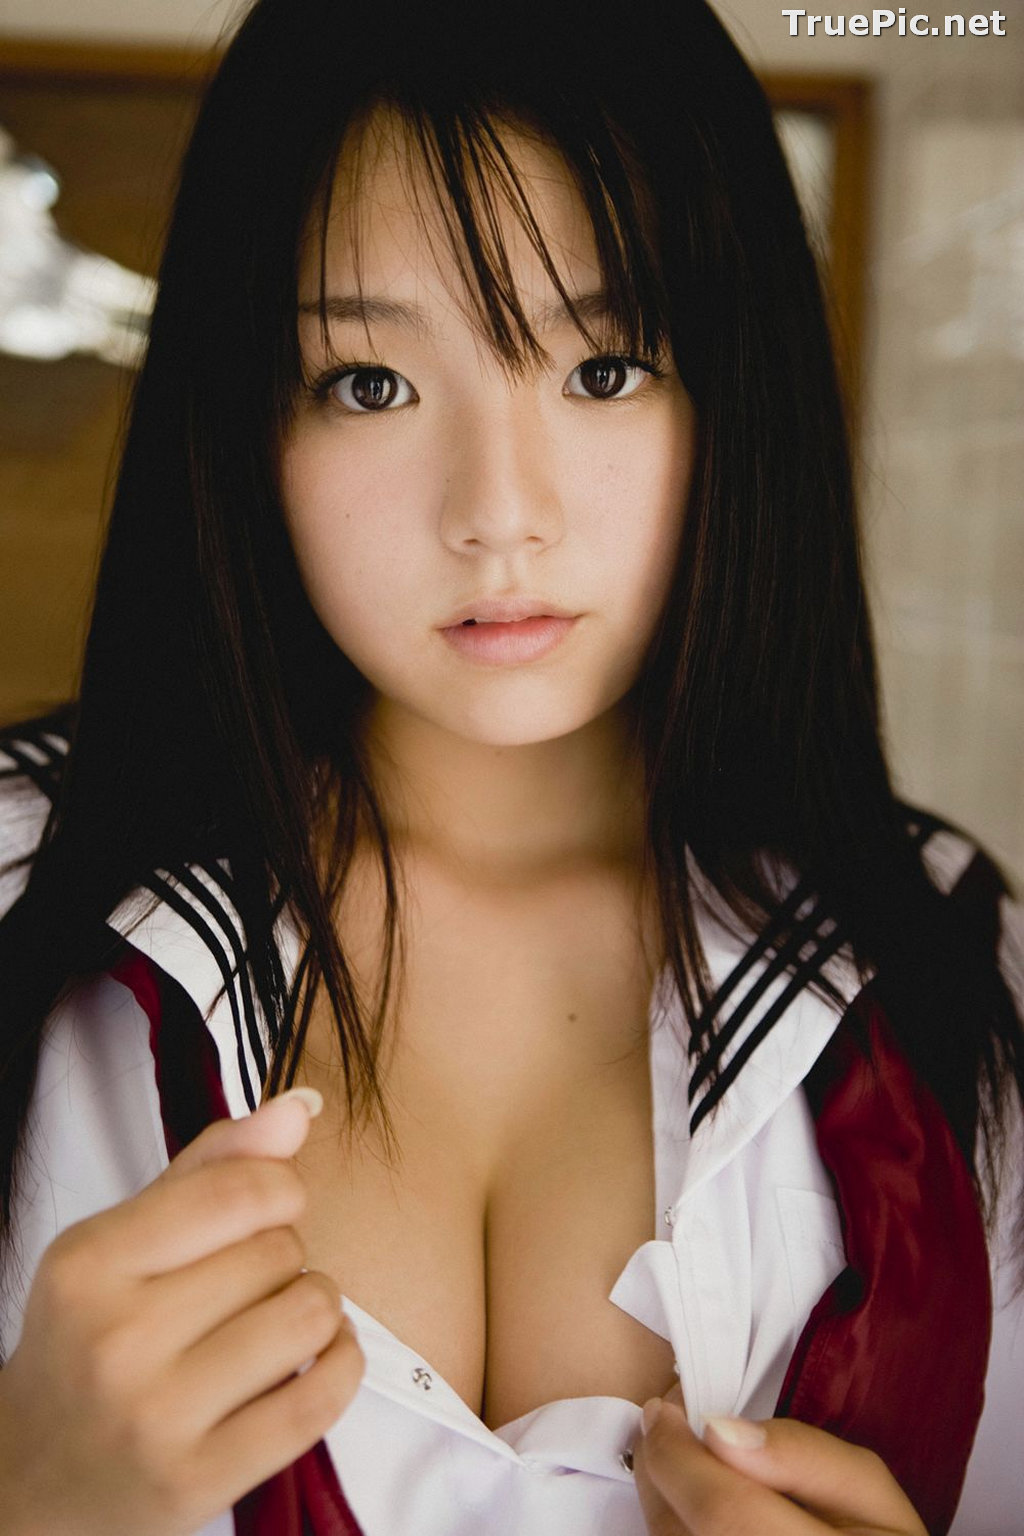 Image [YS Web] Vol.335 - Japanese Model Ai Shinozaki - Good Love Photo Album - TruePic.net - Picture-33